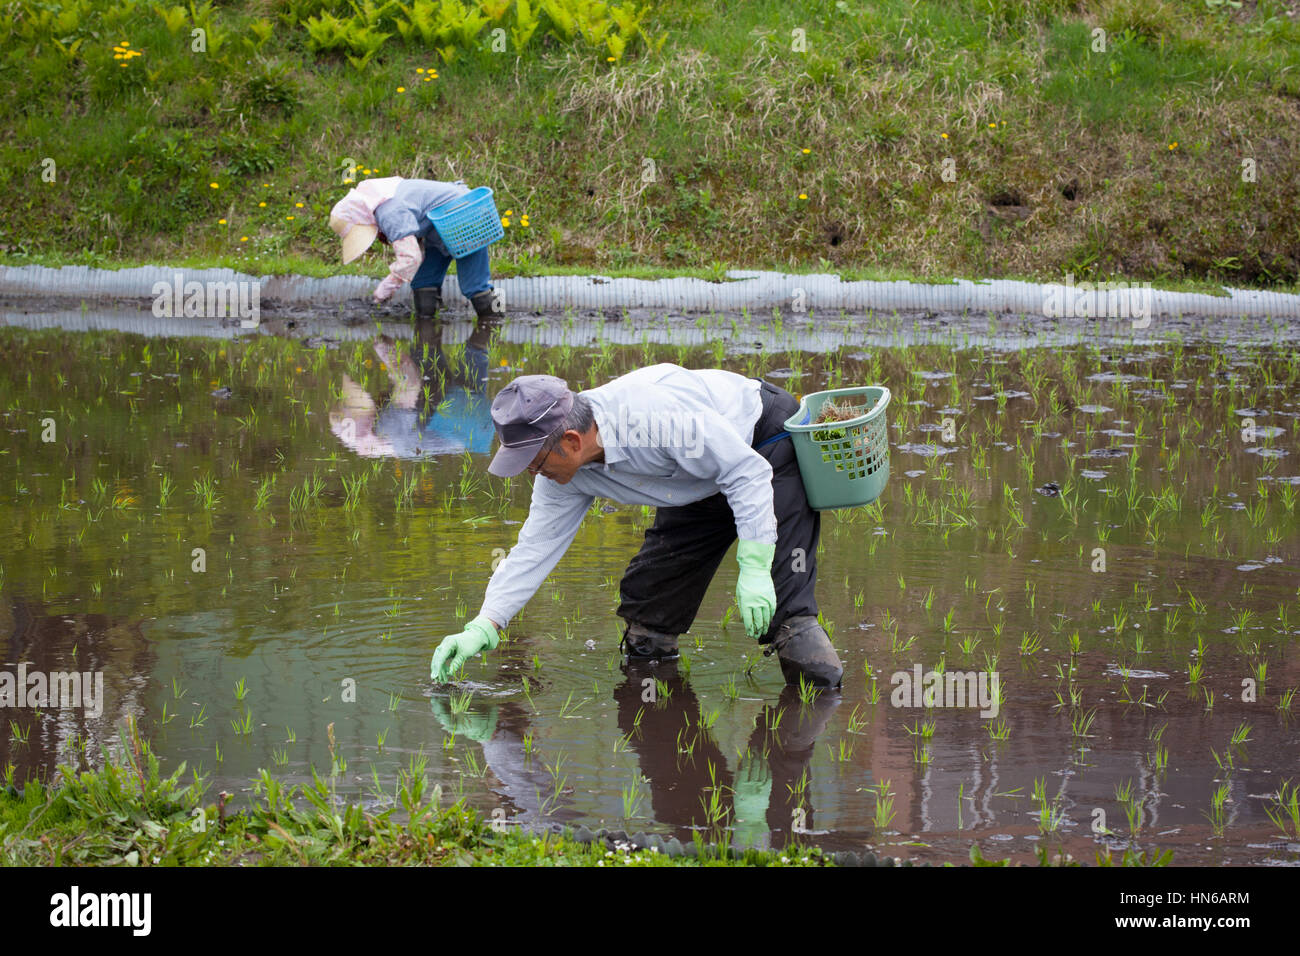 HAKUBA, JAPAN - May 17 : People planting rice seedlings in a flooded paddy field near Lake Aoki, Hakuba on 17th May 2012. It is unusual to see rice pl Stock Photo